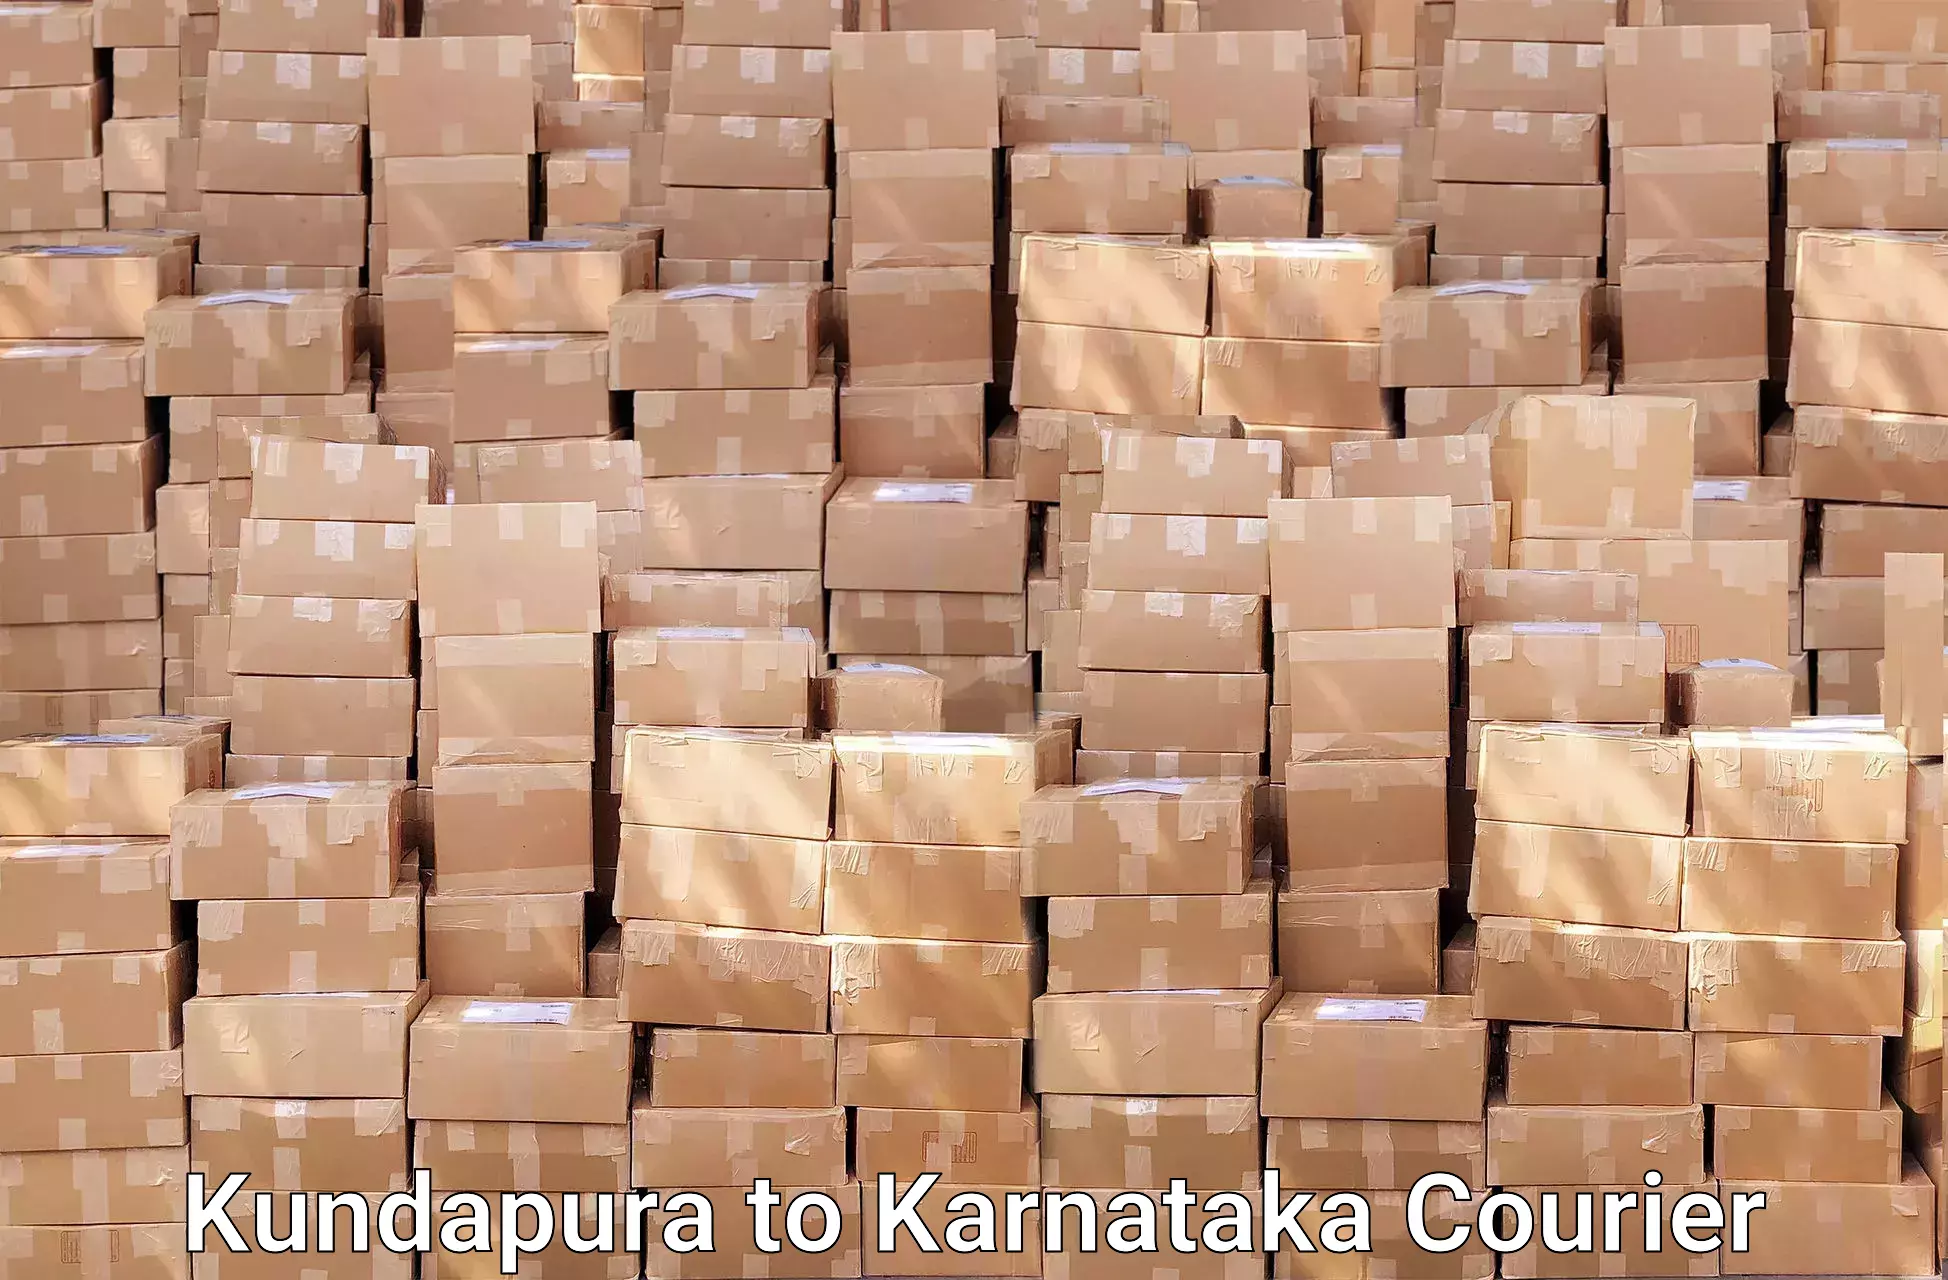 Quality moving and storage Kundapura to Kalaburagi